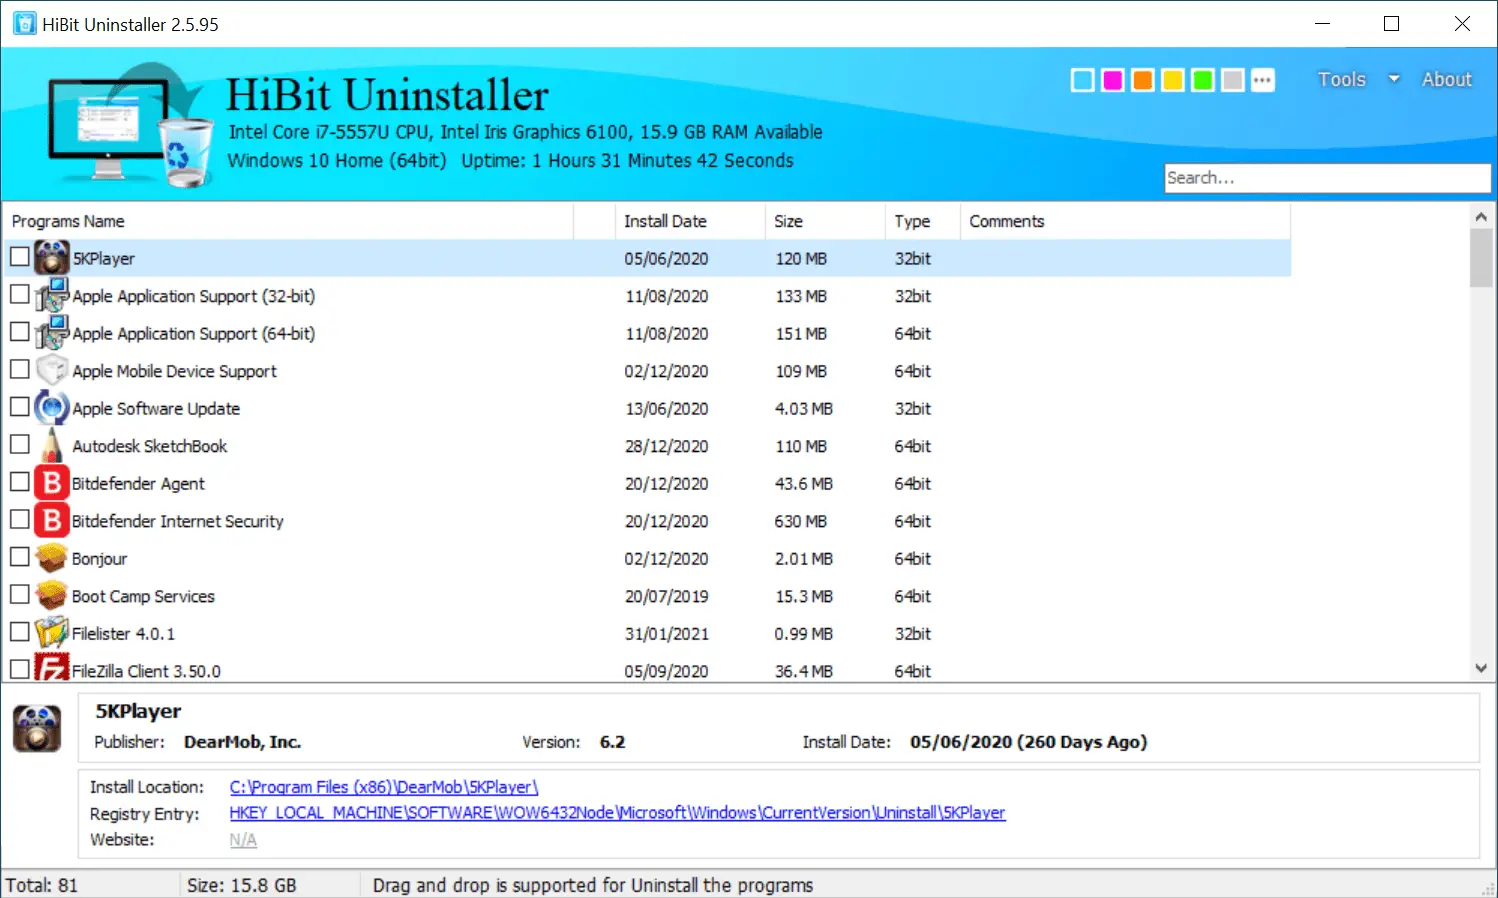 download the last version for apple HiBit Uninstaller 3.1.40